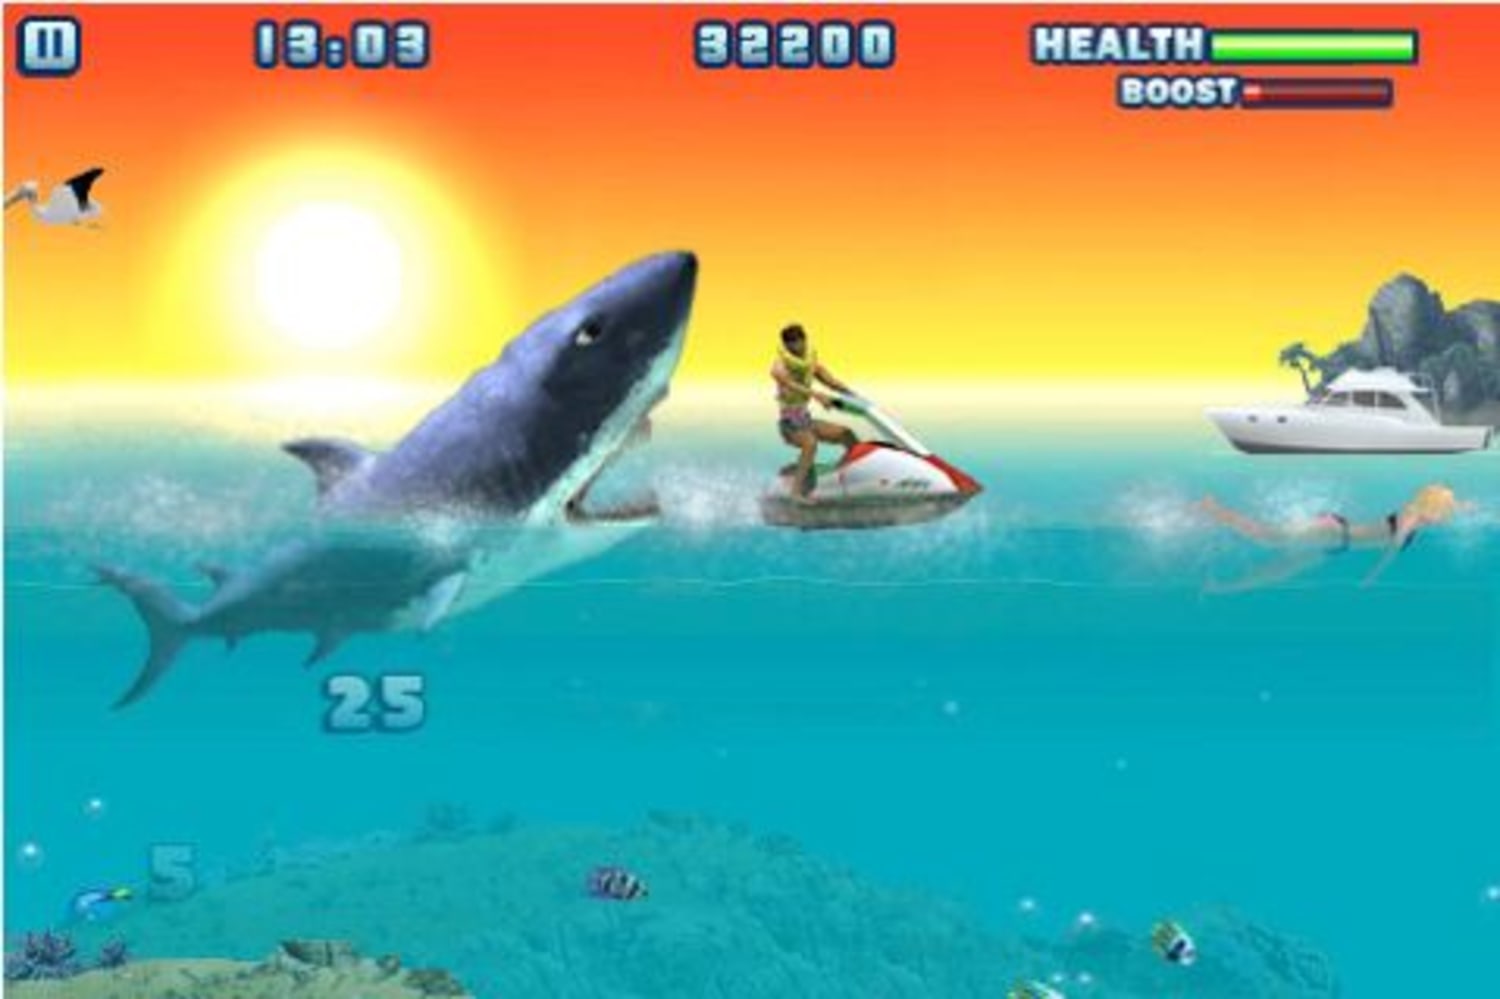 Shark Attack : Fun Fish Games